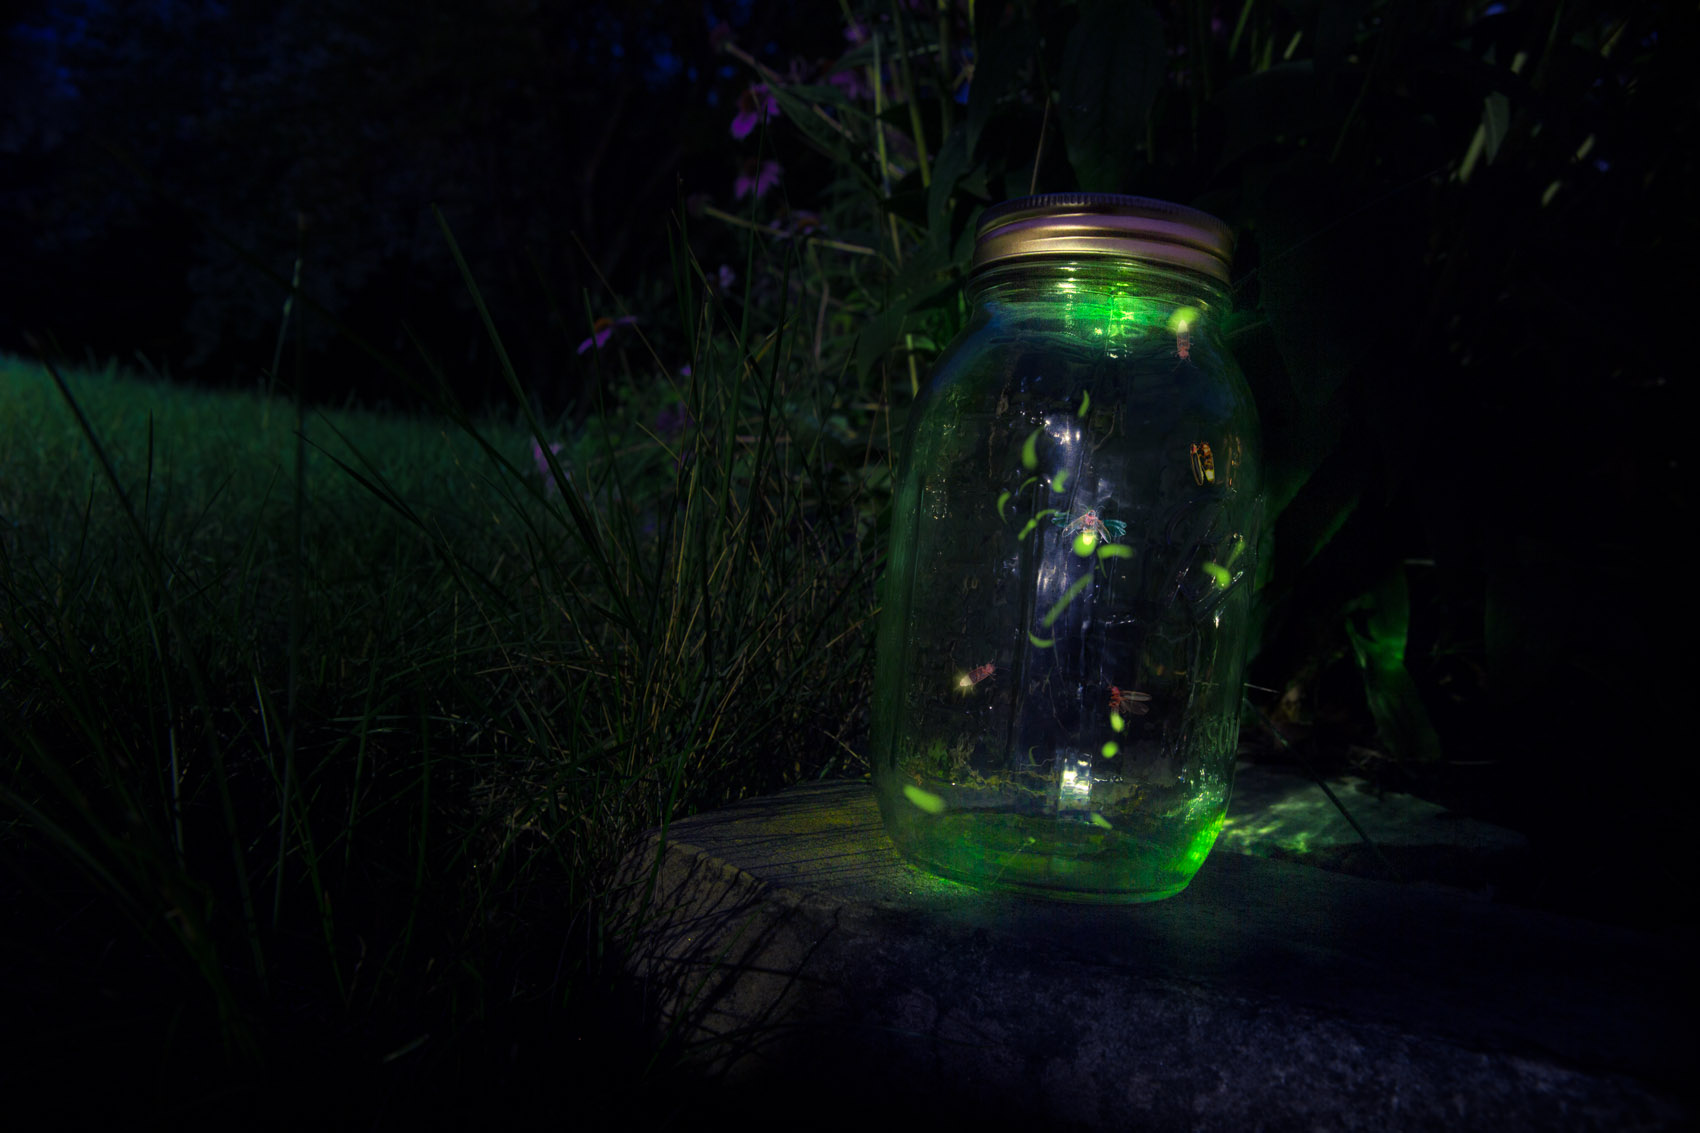 A mason jar of flickering fireflies